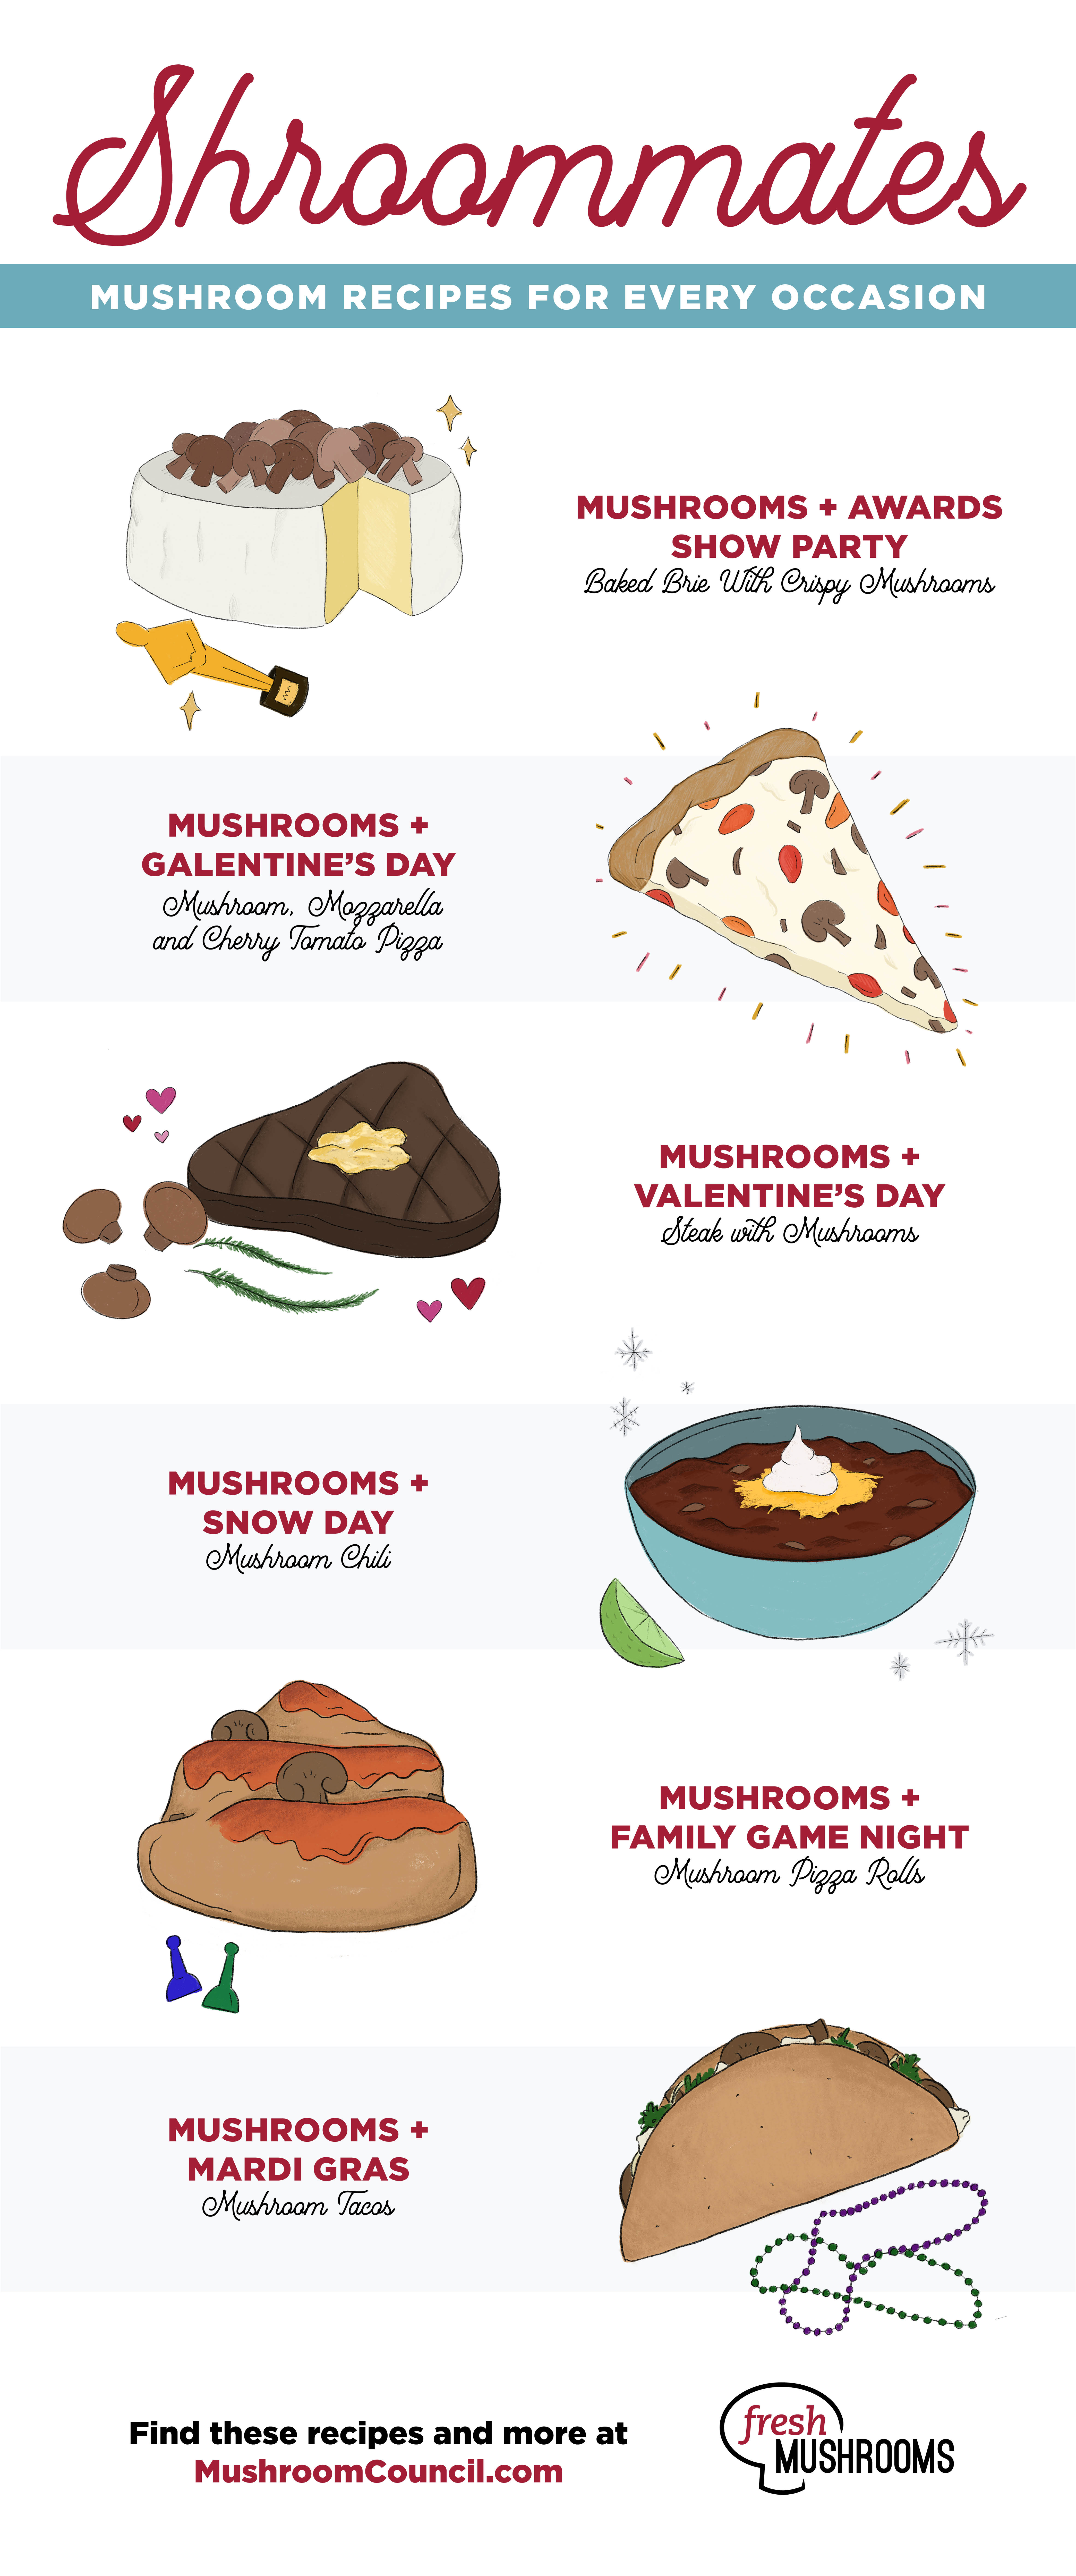 Shroommates: Mushroom Recipes For Every Occasion